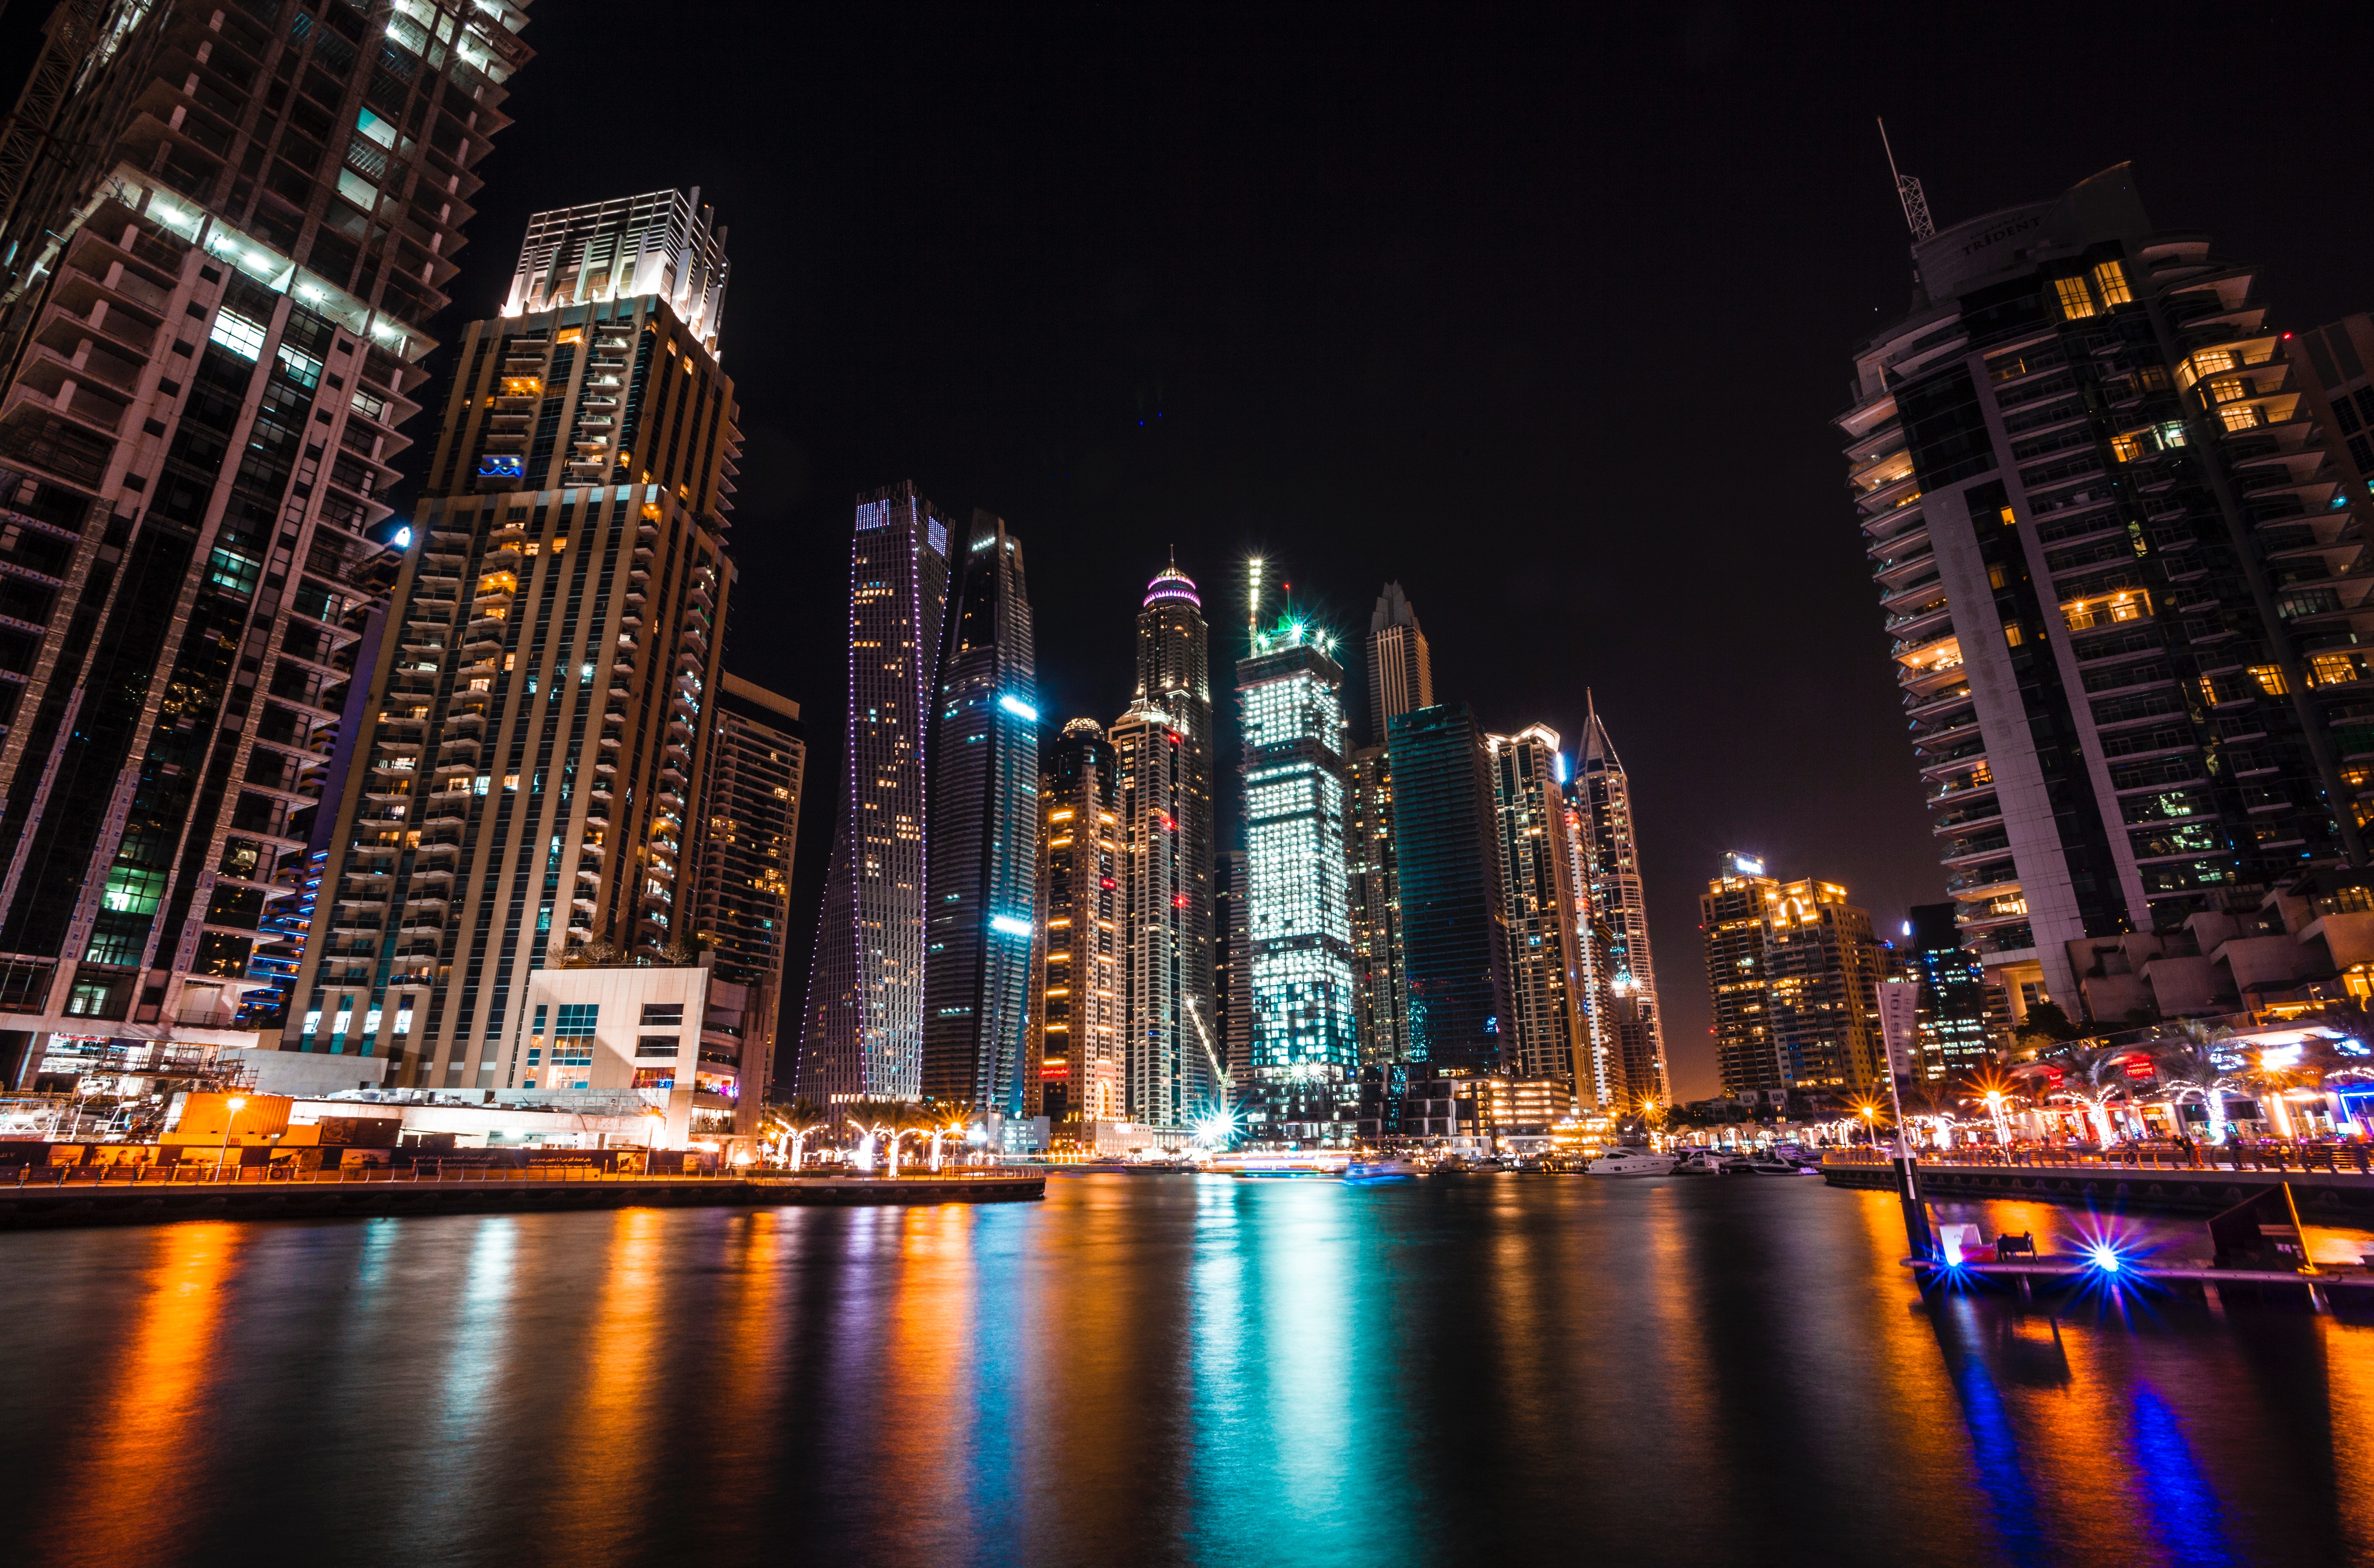 109259 descargar imagen ciudades, dubai, noche, rascacielos, emiratos árabes unidos: fondos de pantalla y protectores de pantalla gratis